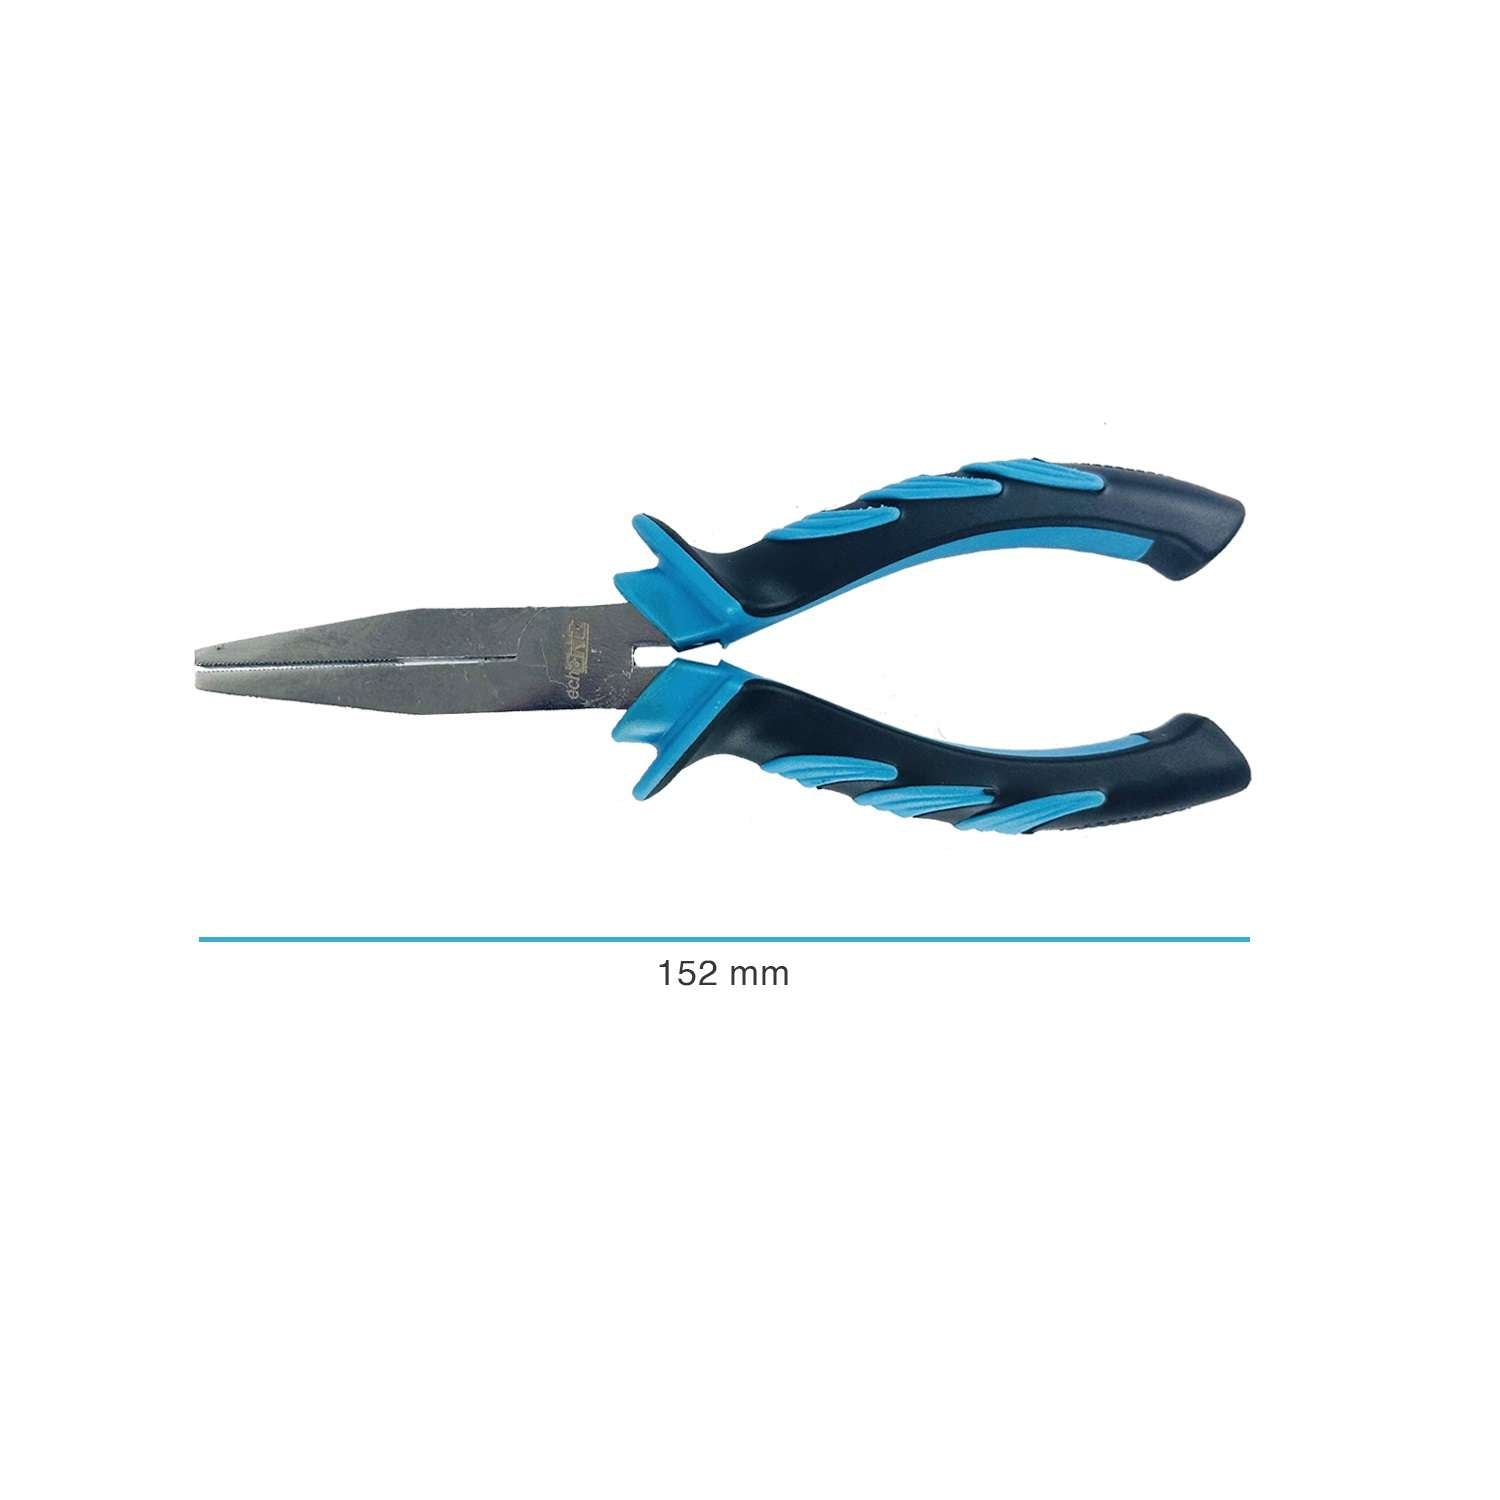 Flat nose plier Cr-V anti-slip ergonomic handle mm 150 - UM 30 P015